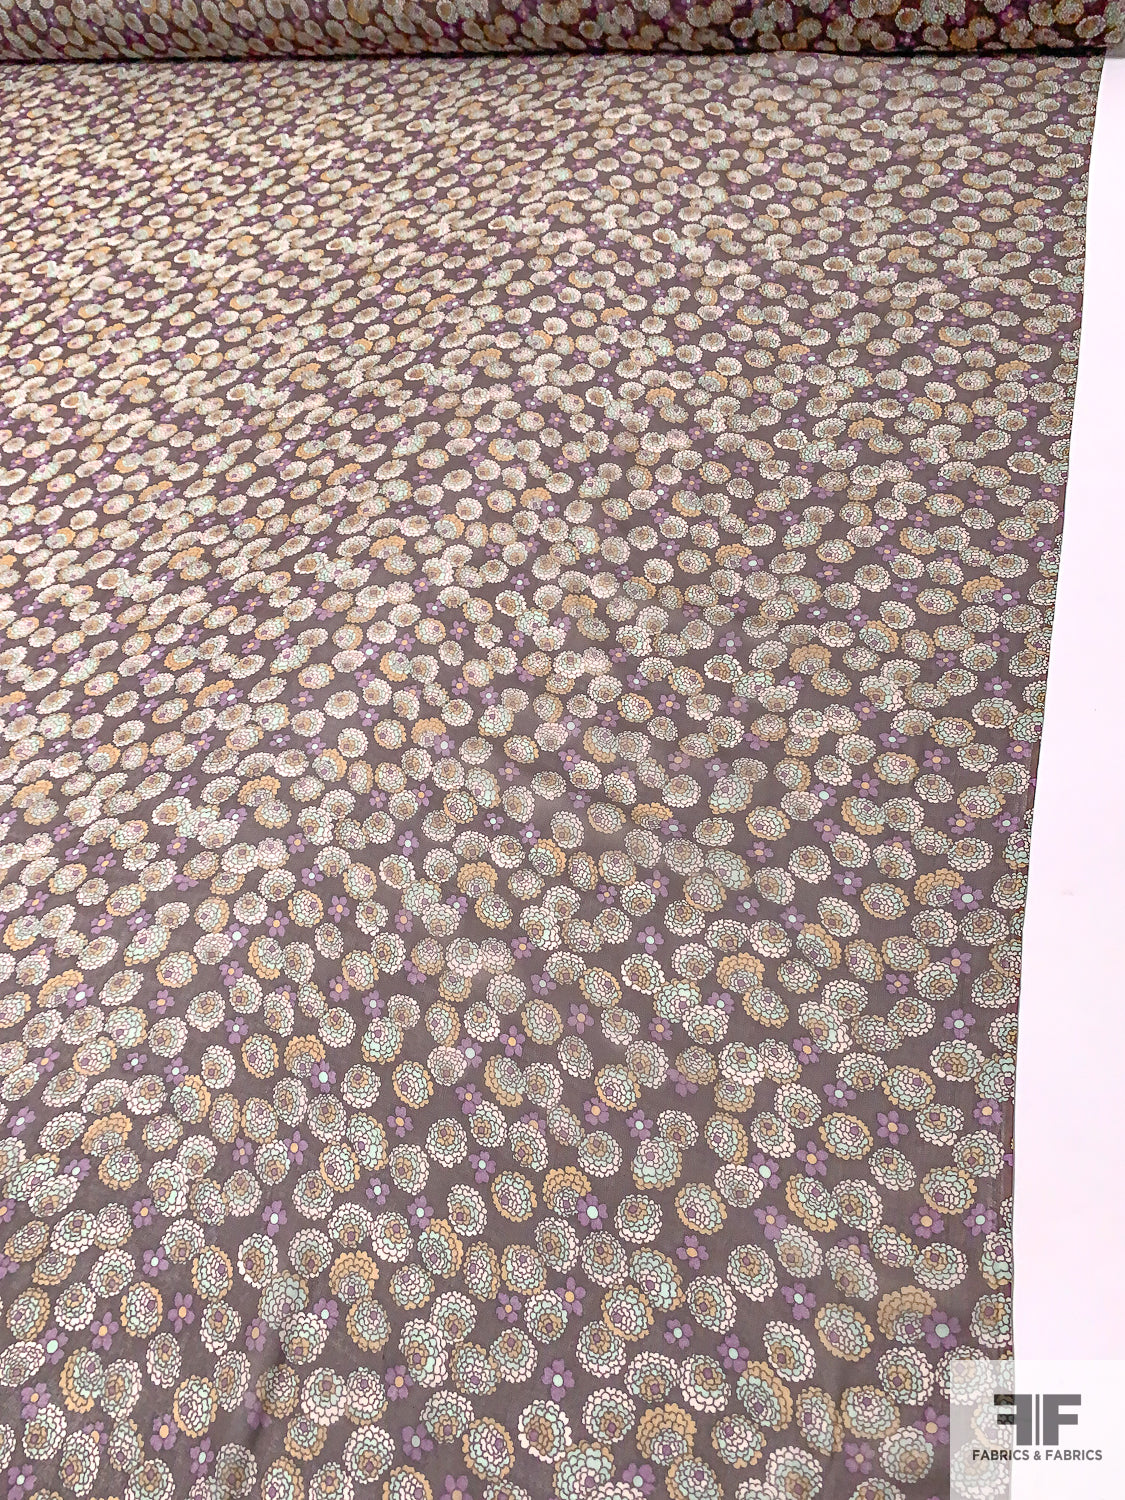 Floral Clusters Printed Silk Chiffon - Eggplant / Seafoam / Purple / Tan / Off-White